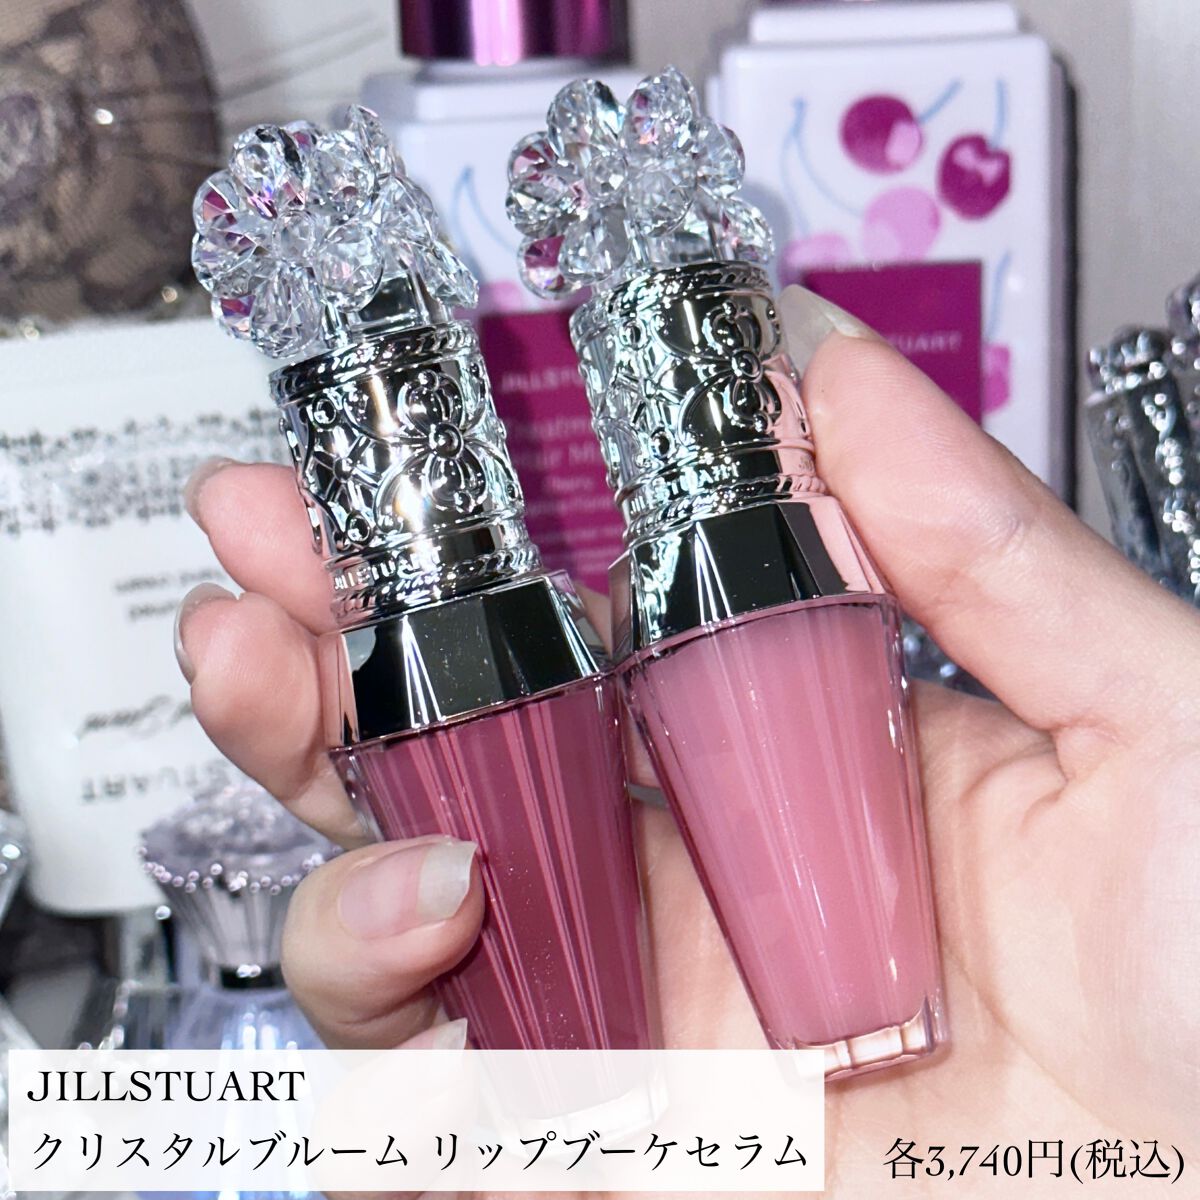 JILLSTUART Beautyクリスタルブルームリップブーケセラム - 通販 ...